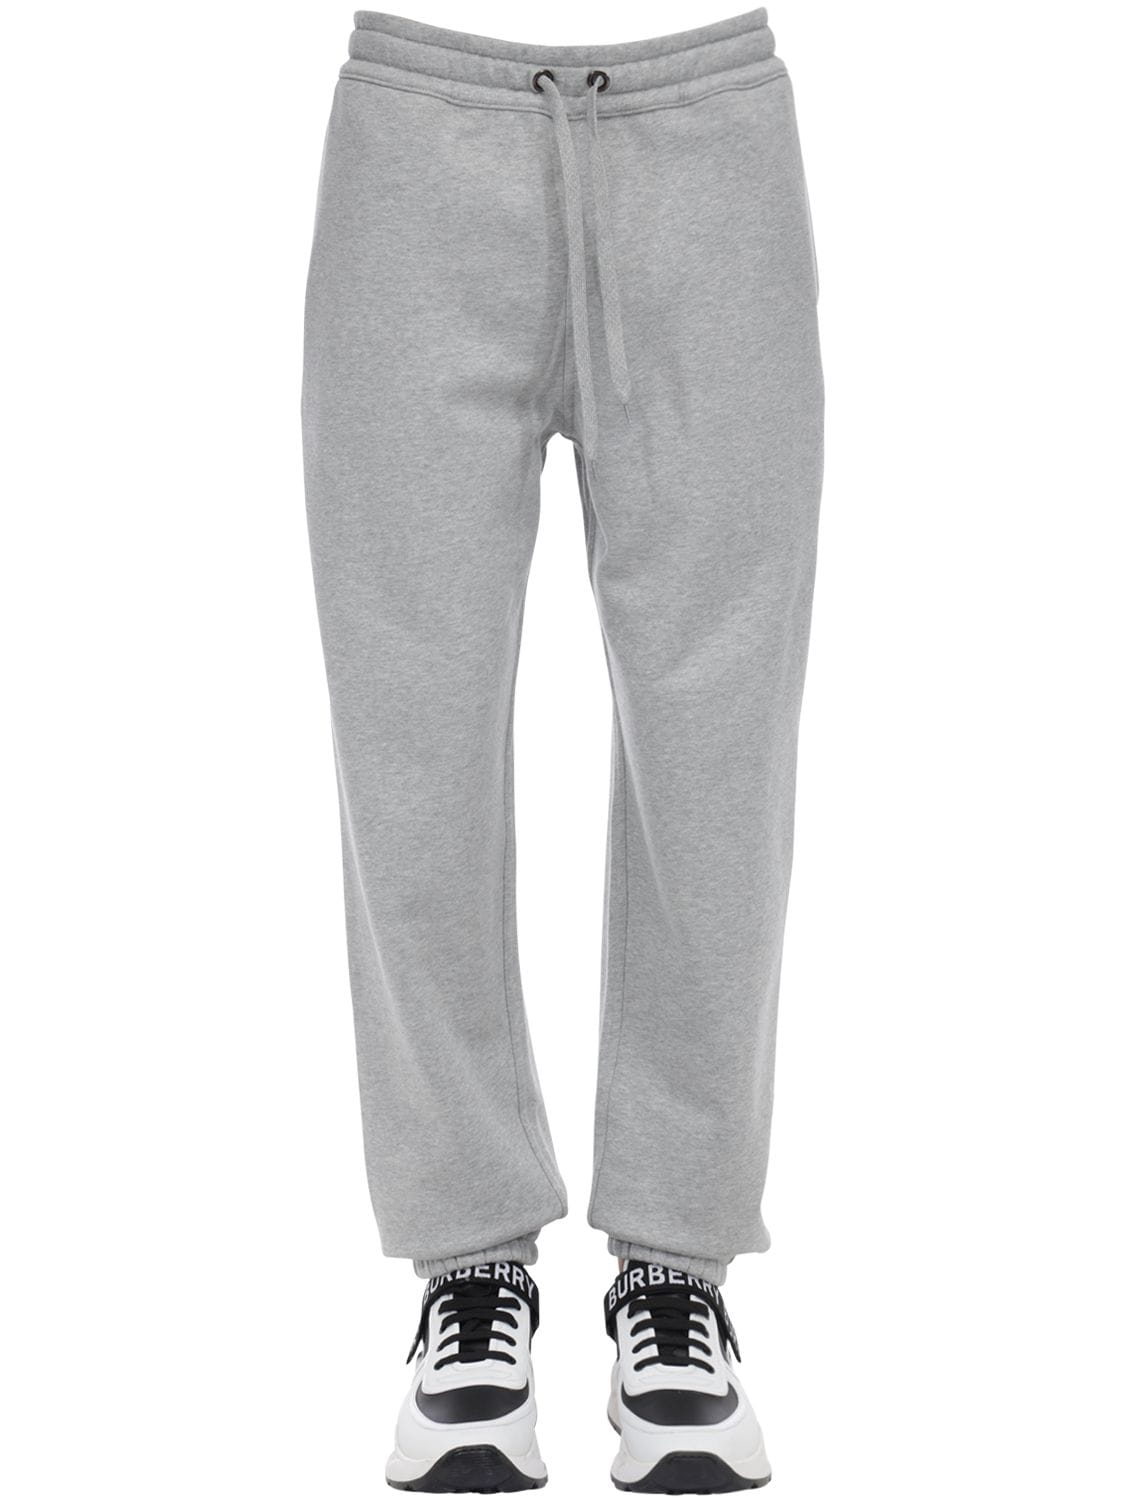 burberry gray sweatpants